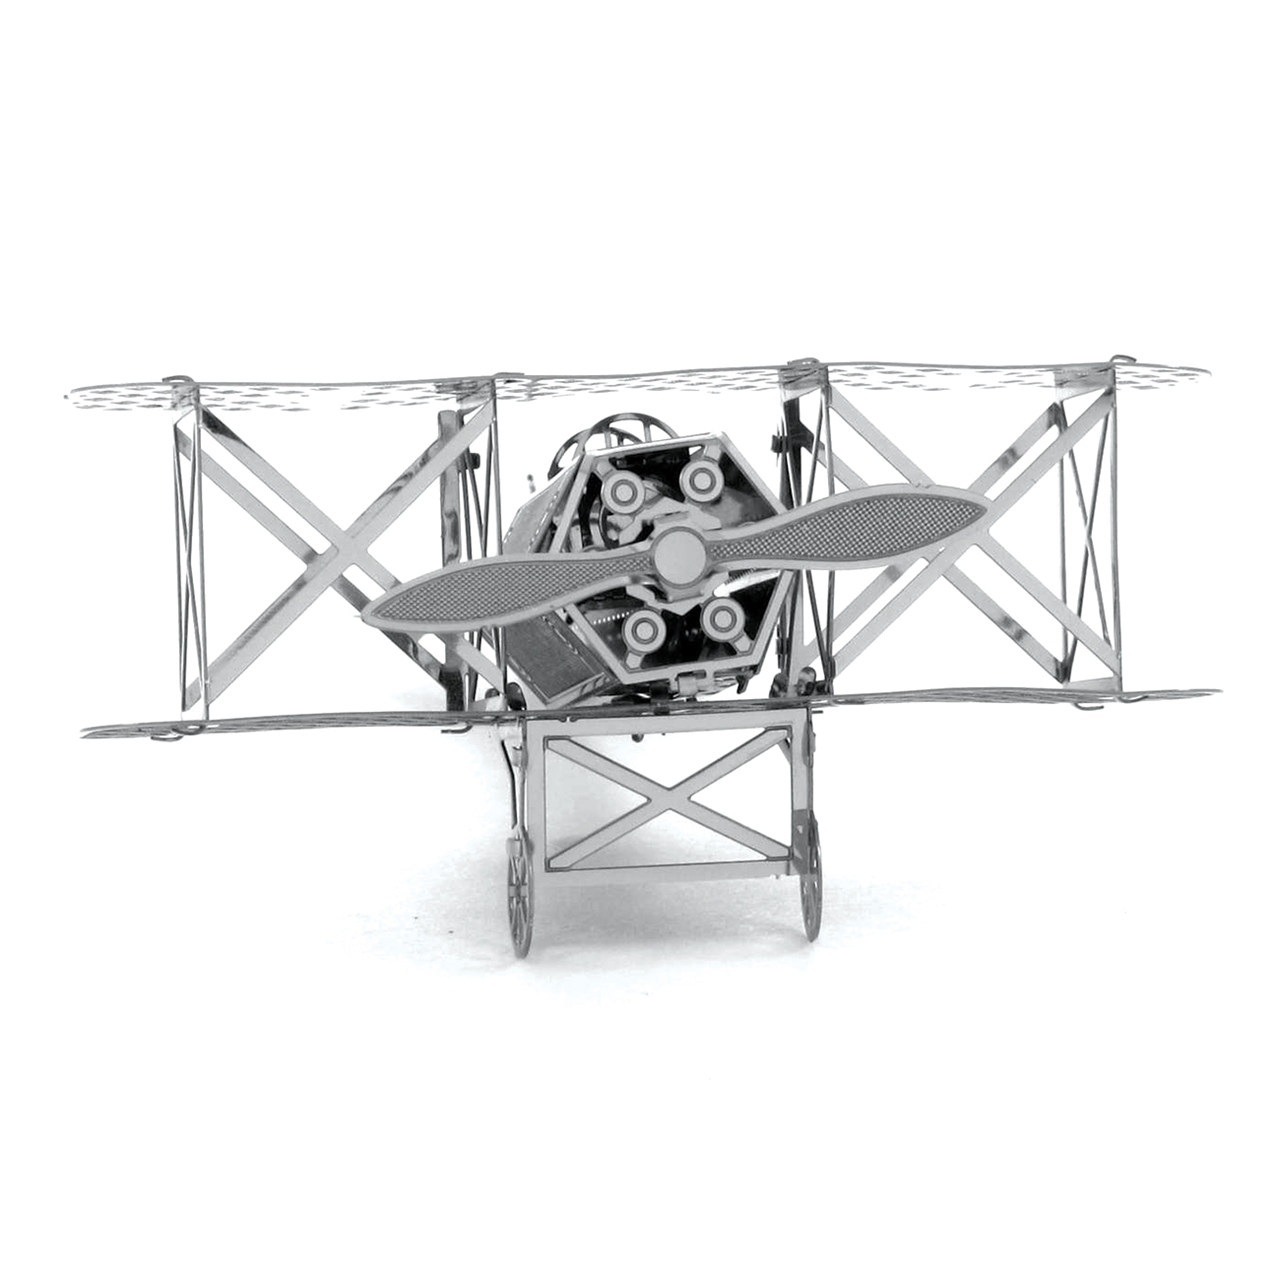 Fascinations Metal Earth 3D Laser Cut Steel Puzzle Model Kit Fokker D-VII Plane 